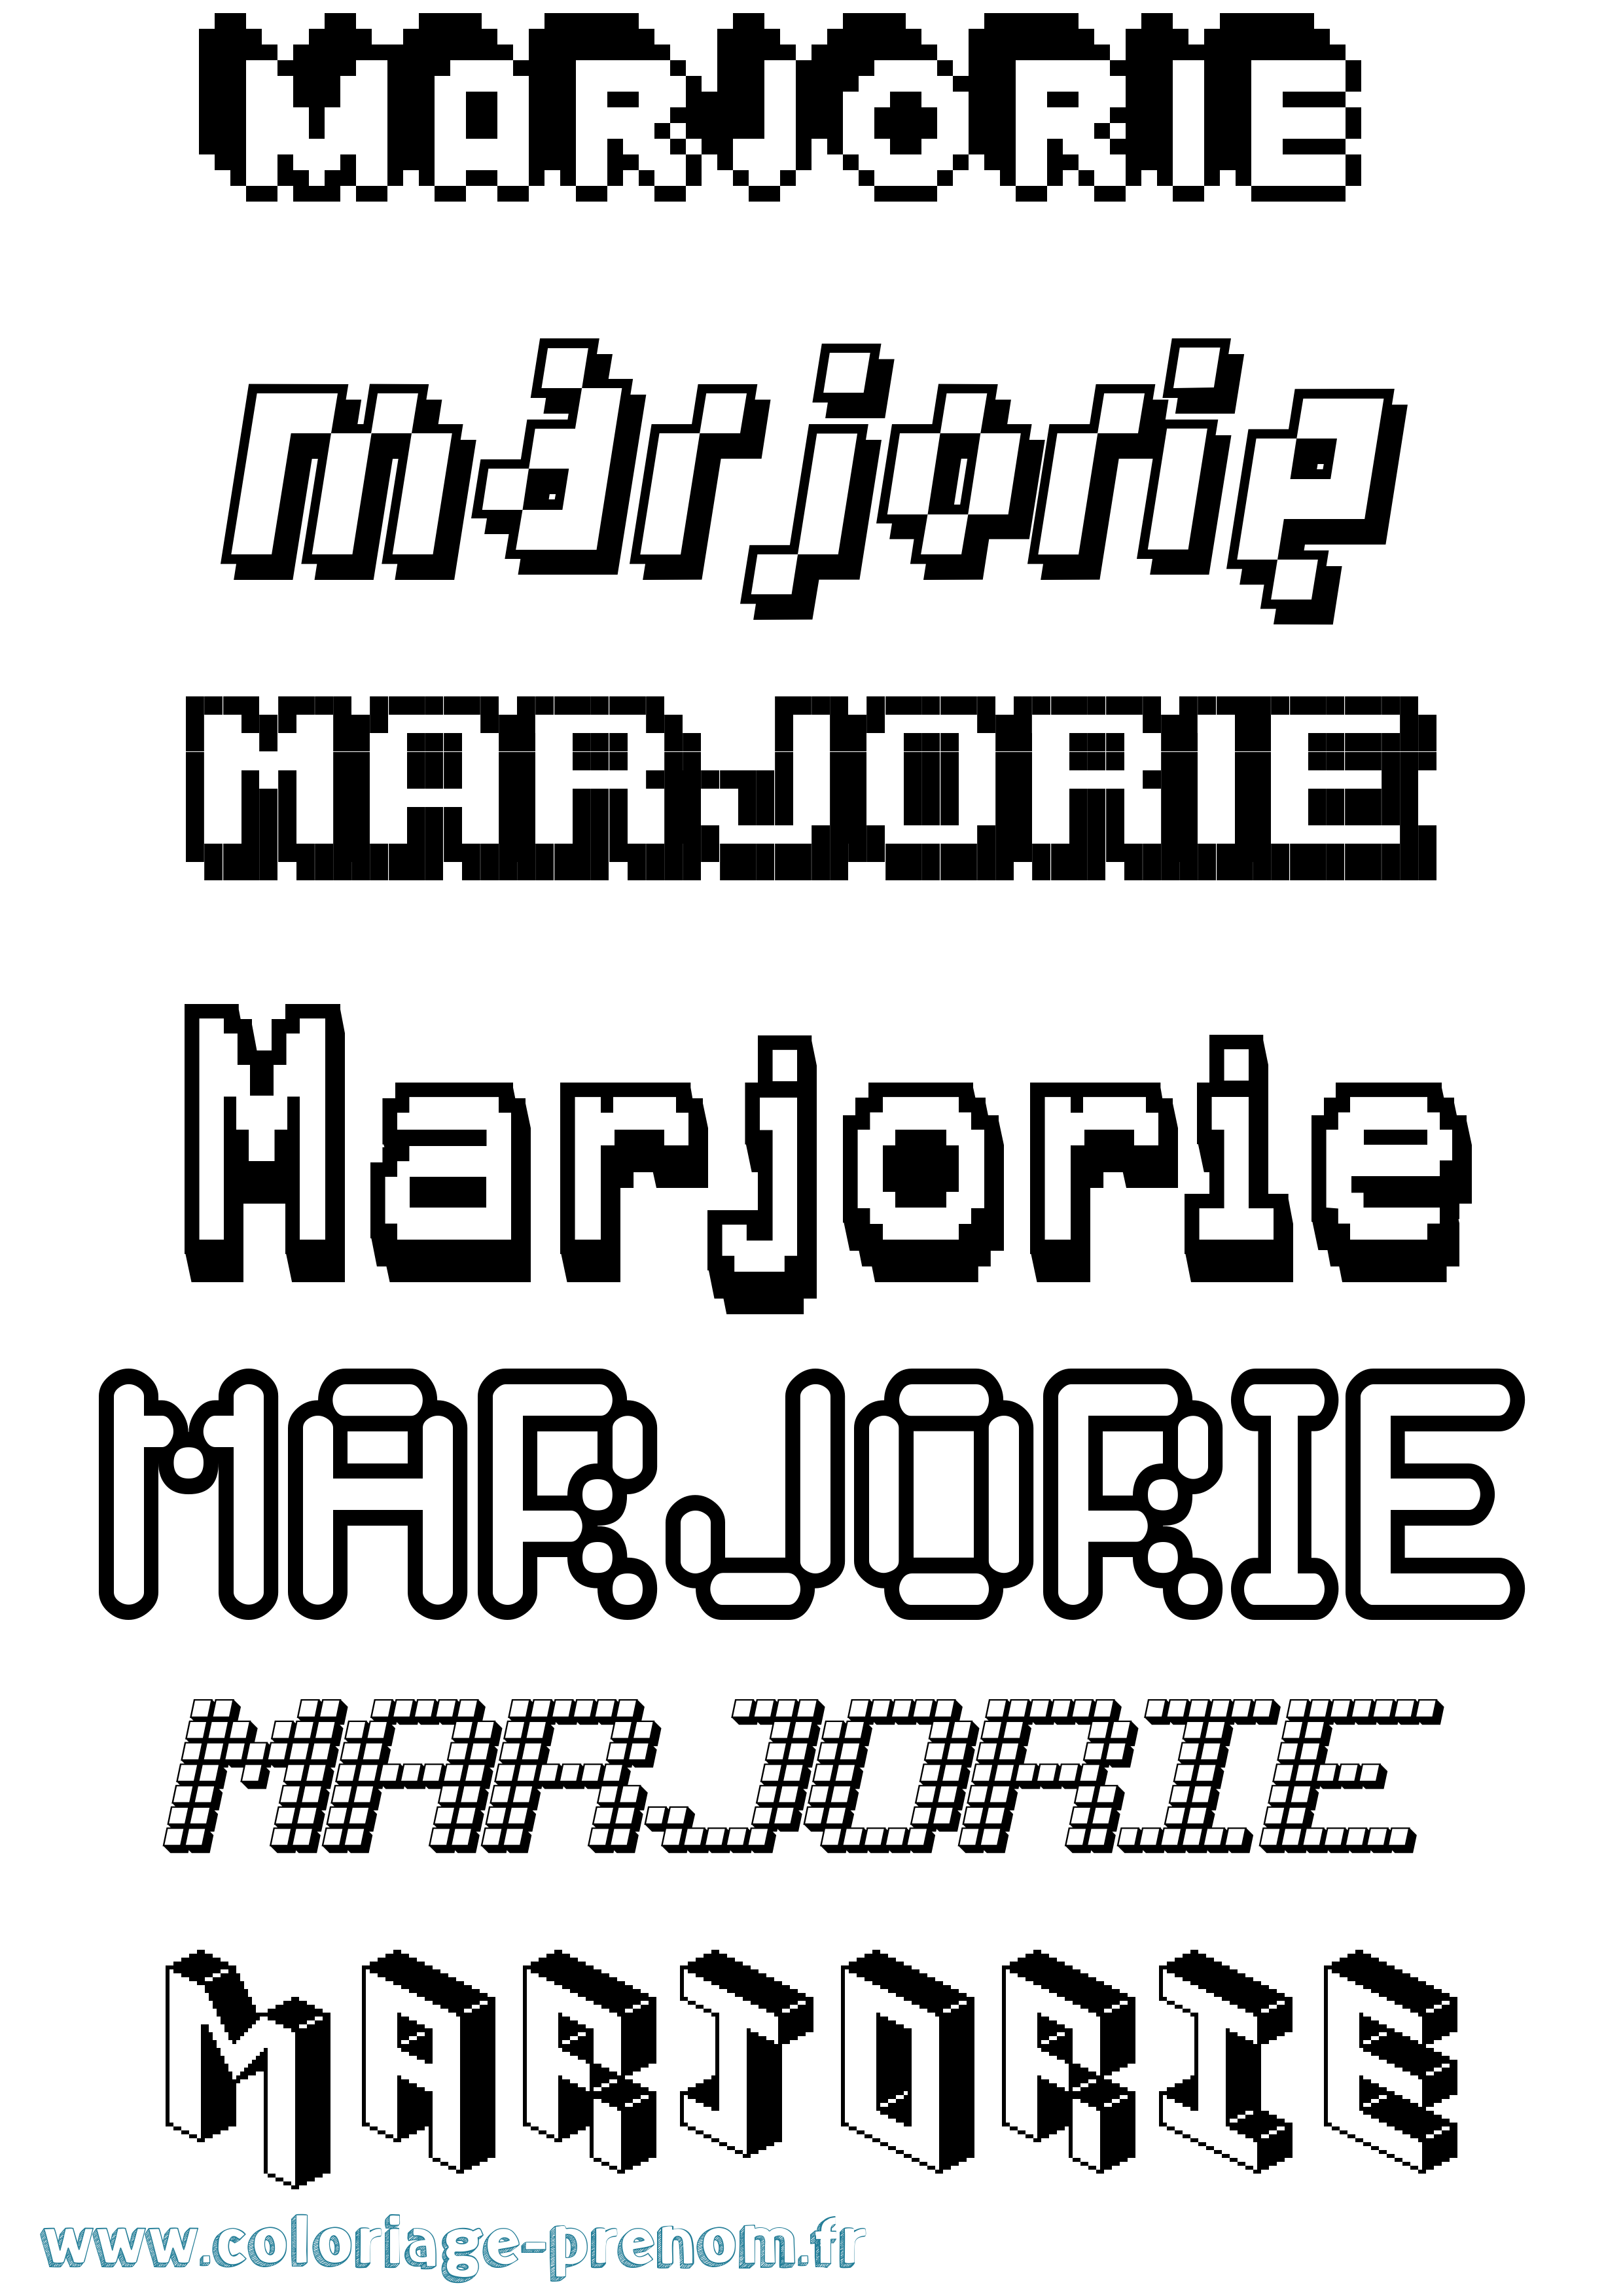 Coloriage prénom Marjorie